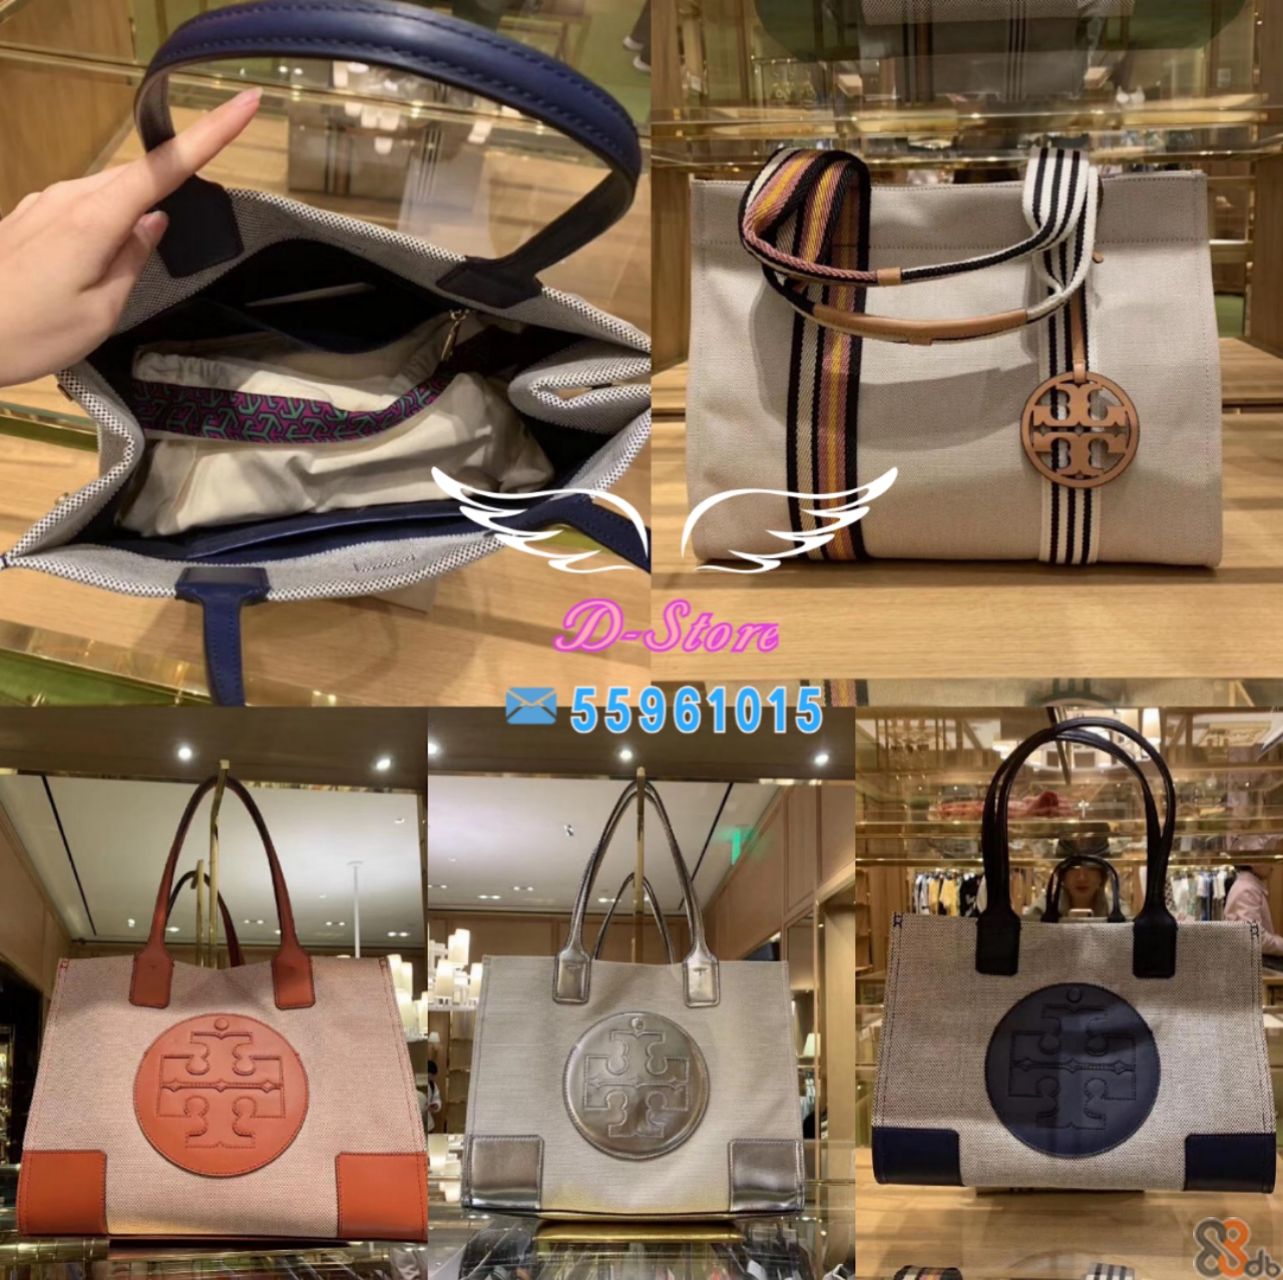 D-Store 55961015 CJ  Handbag,Bag,Fashion accessory,Birkin bag,Luggage and bags